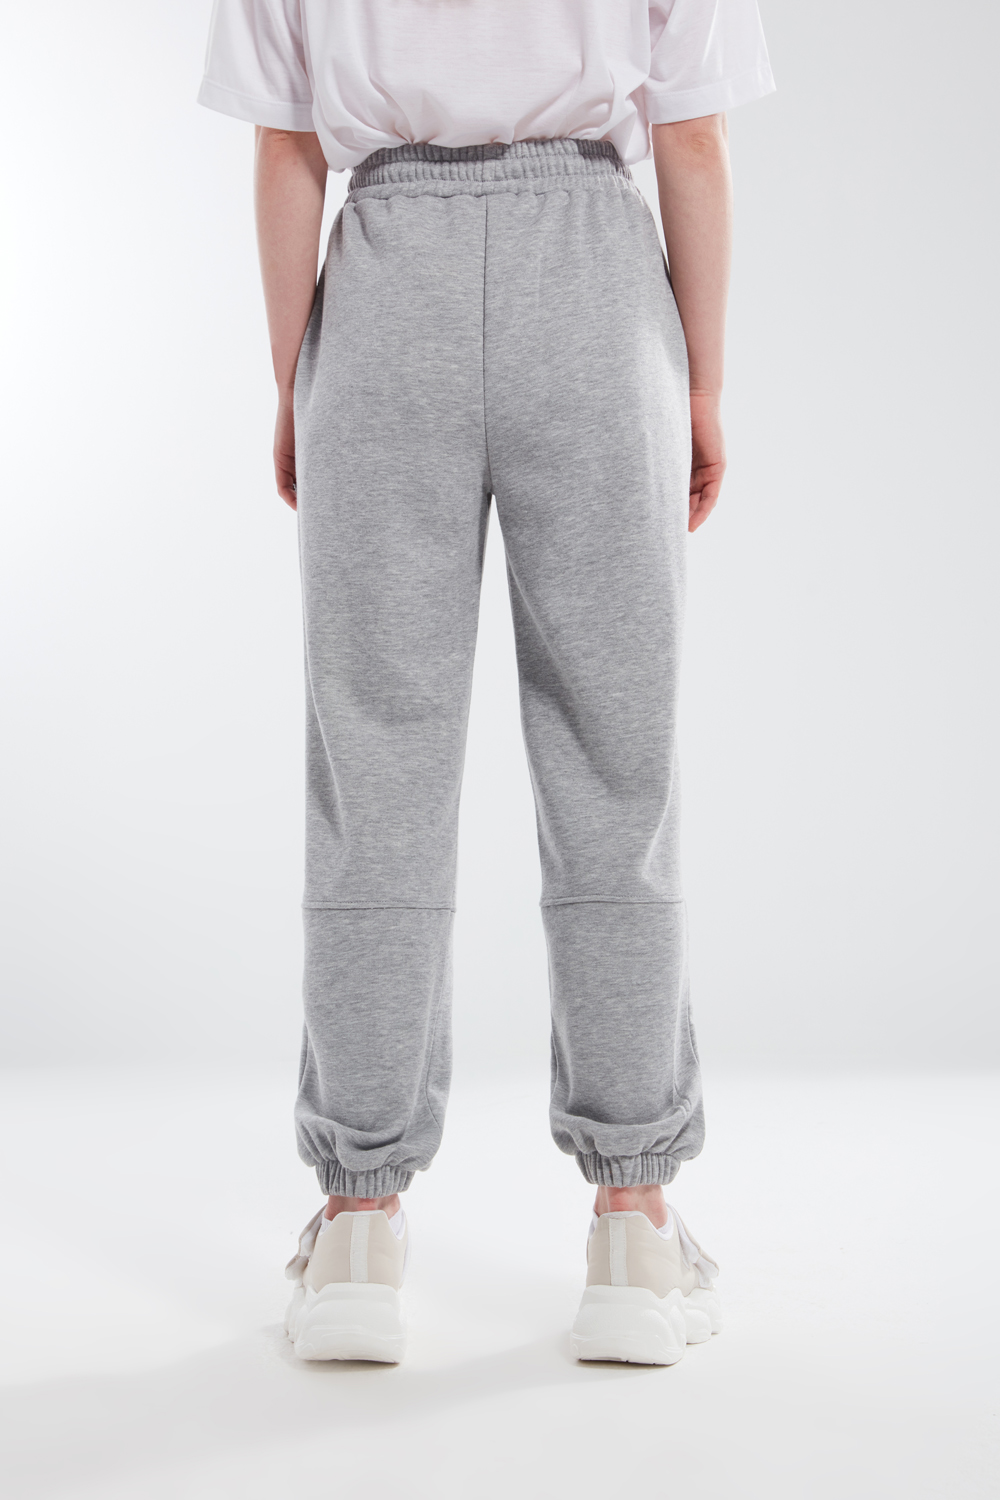 Printed Gray Jogger Sweatpants